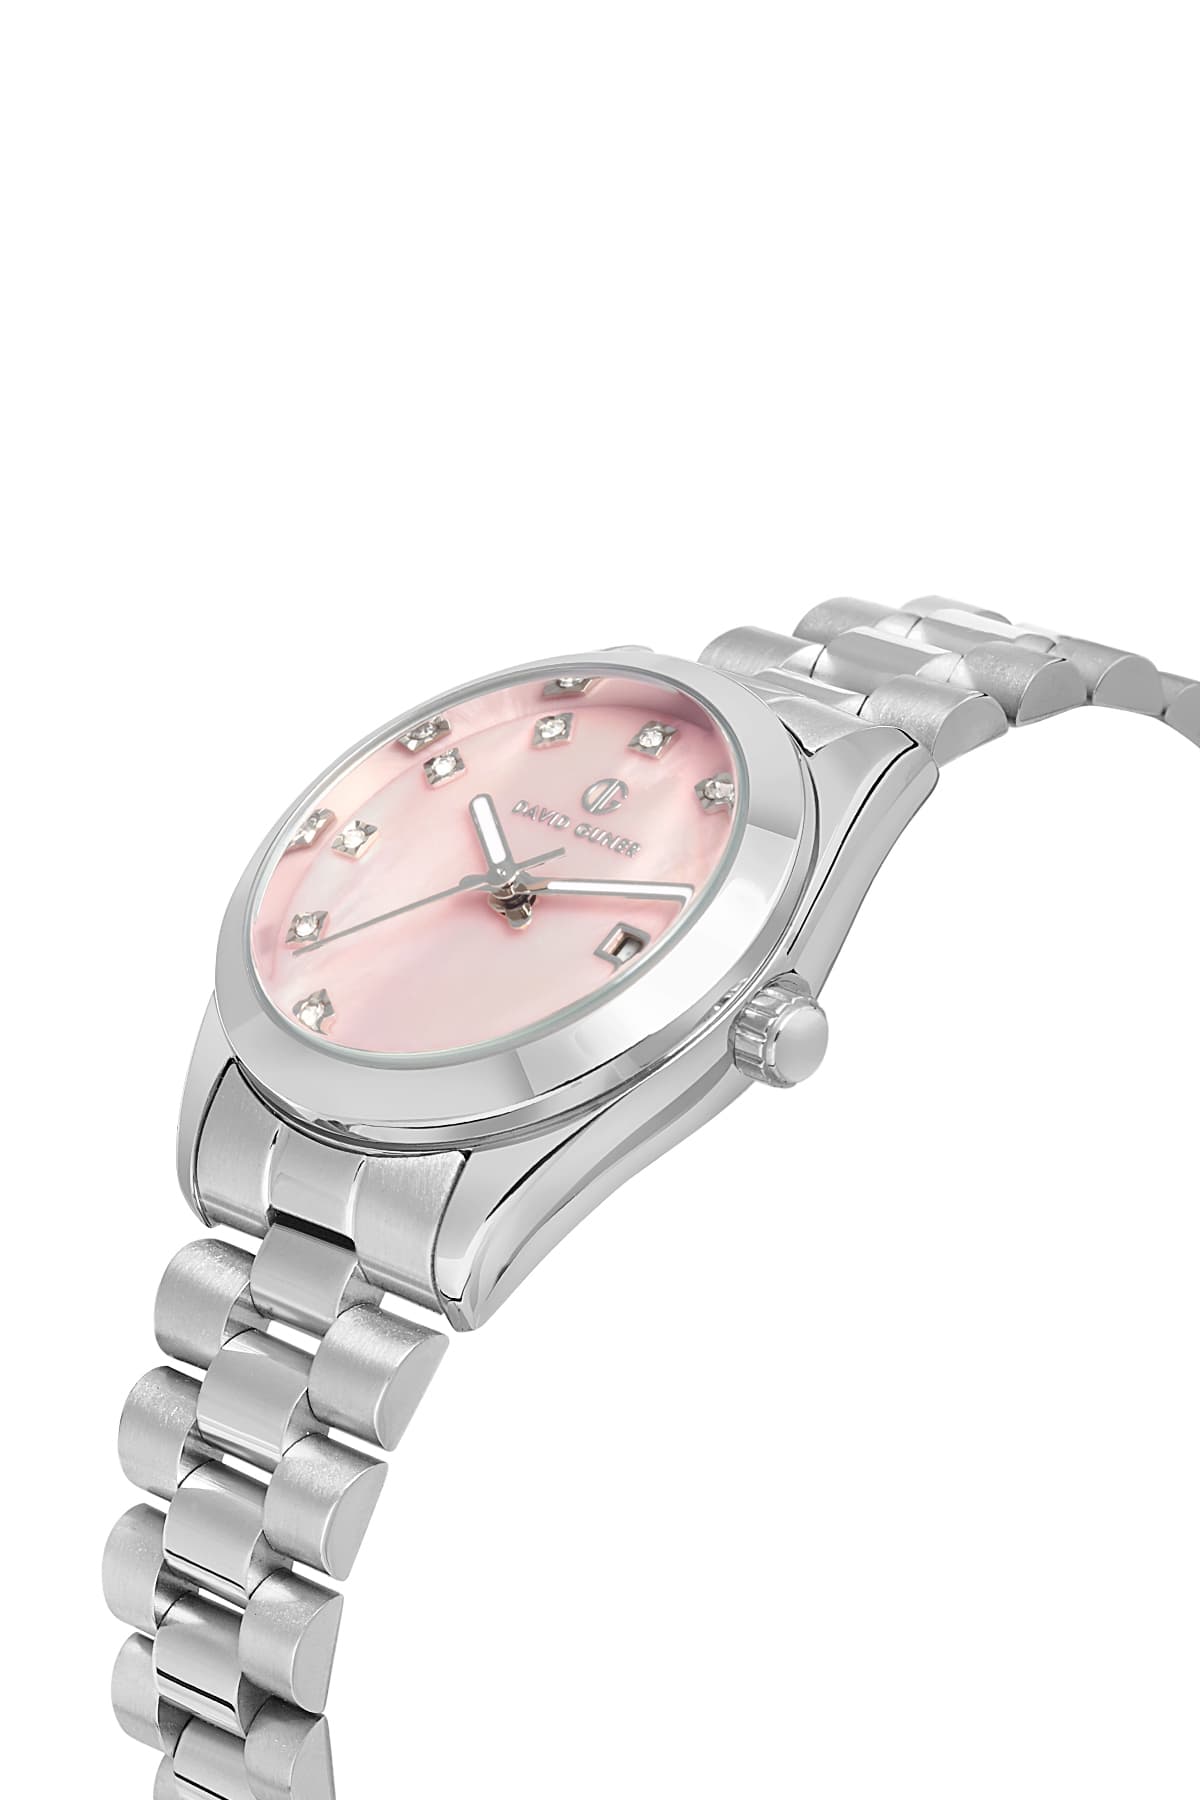 DAVID GUNER Silver Plated Women's Wristwatch